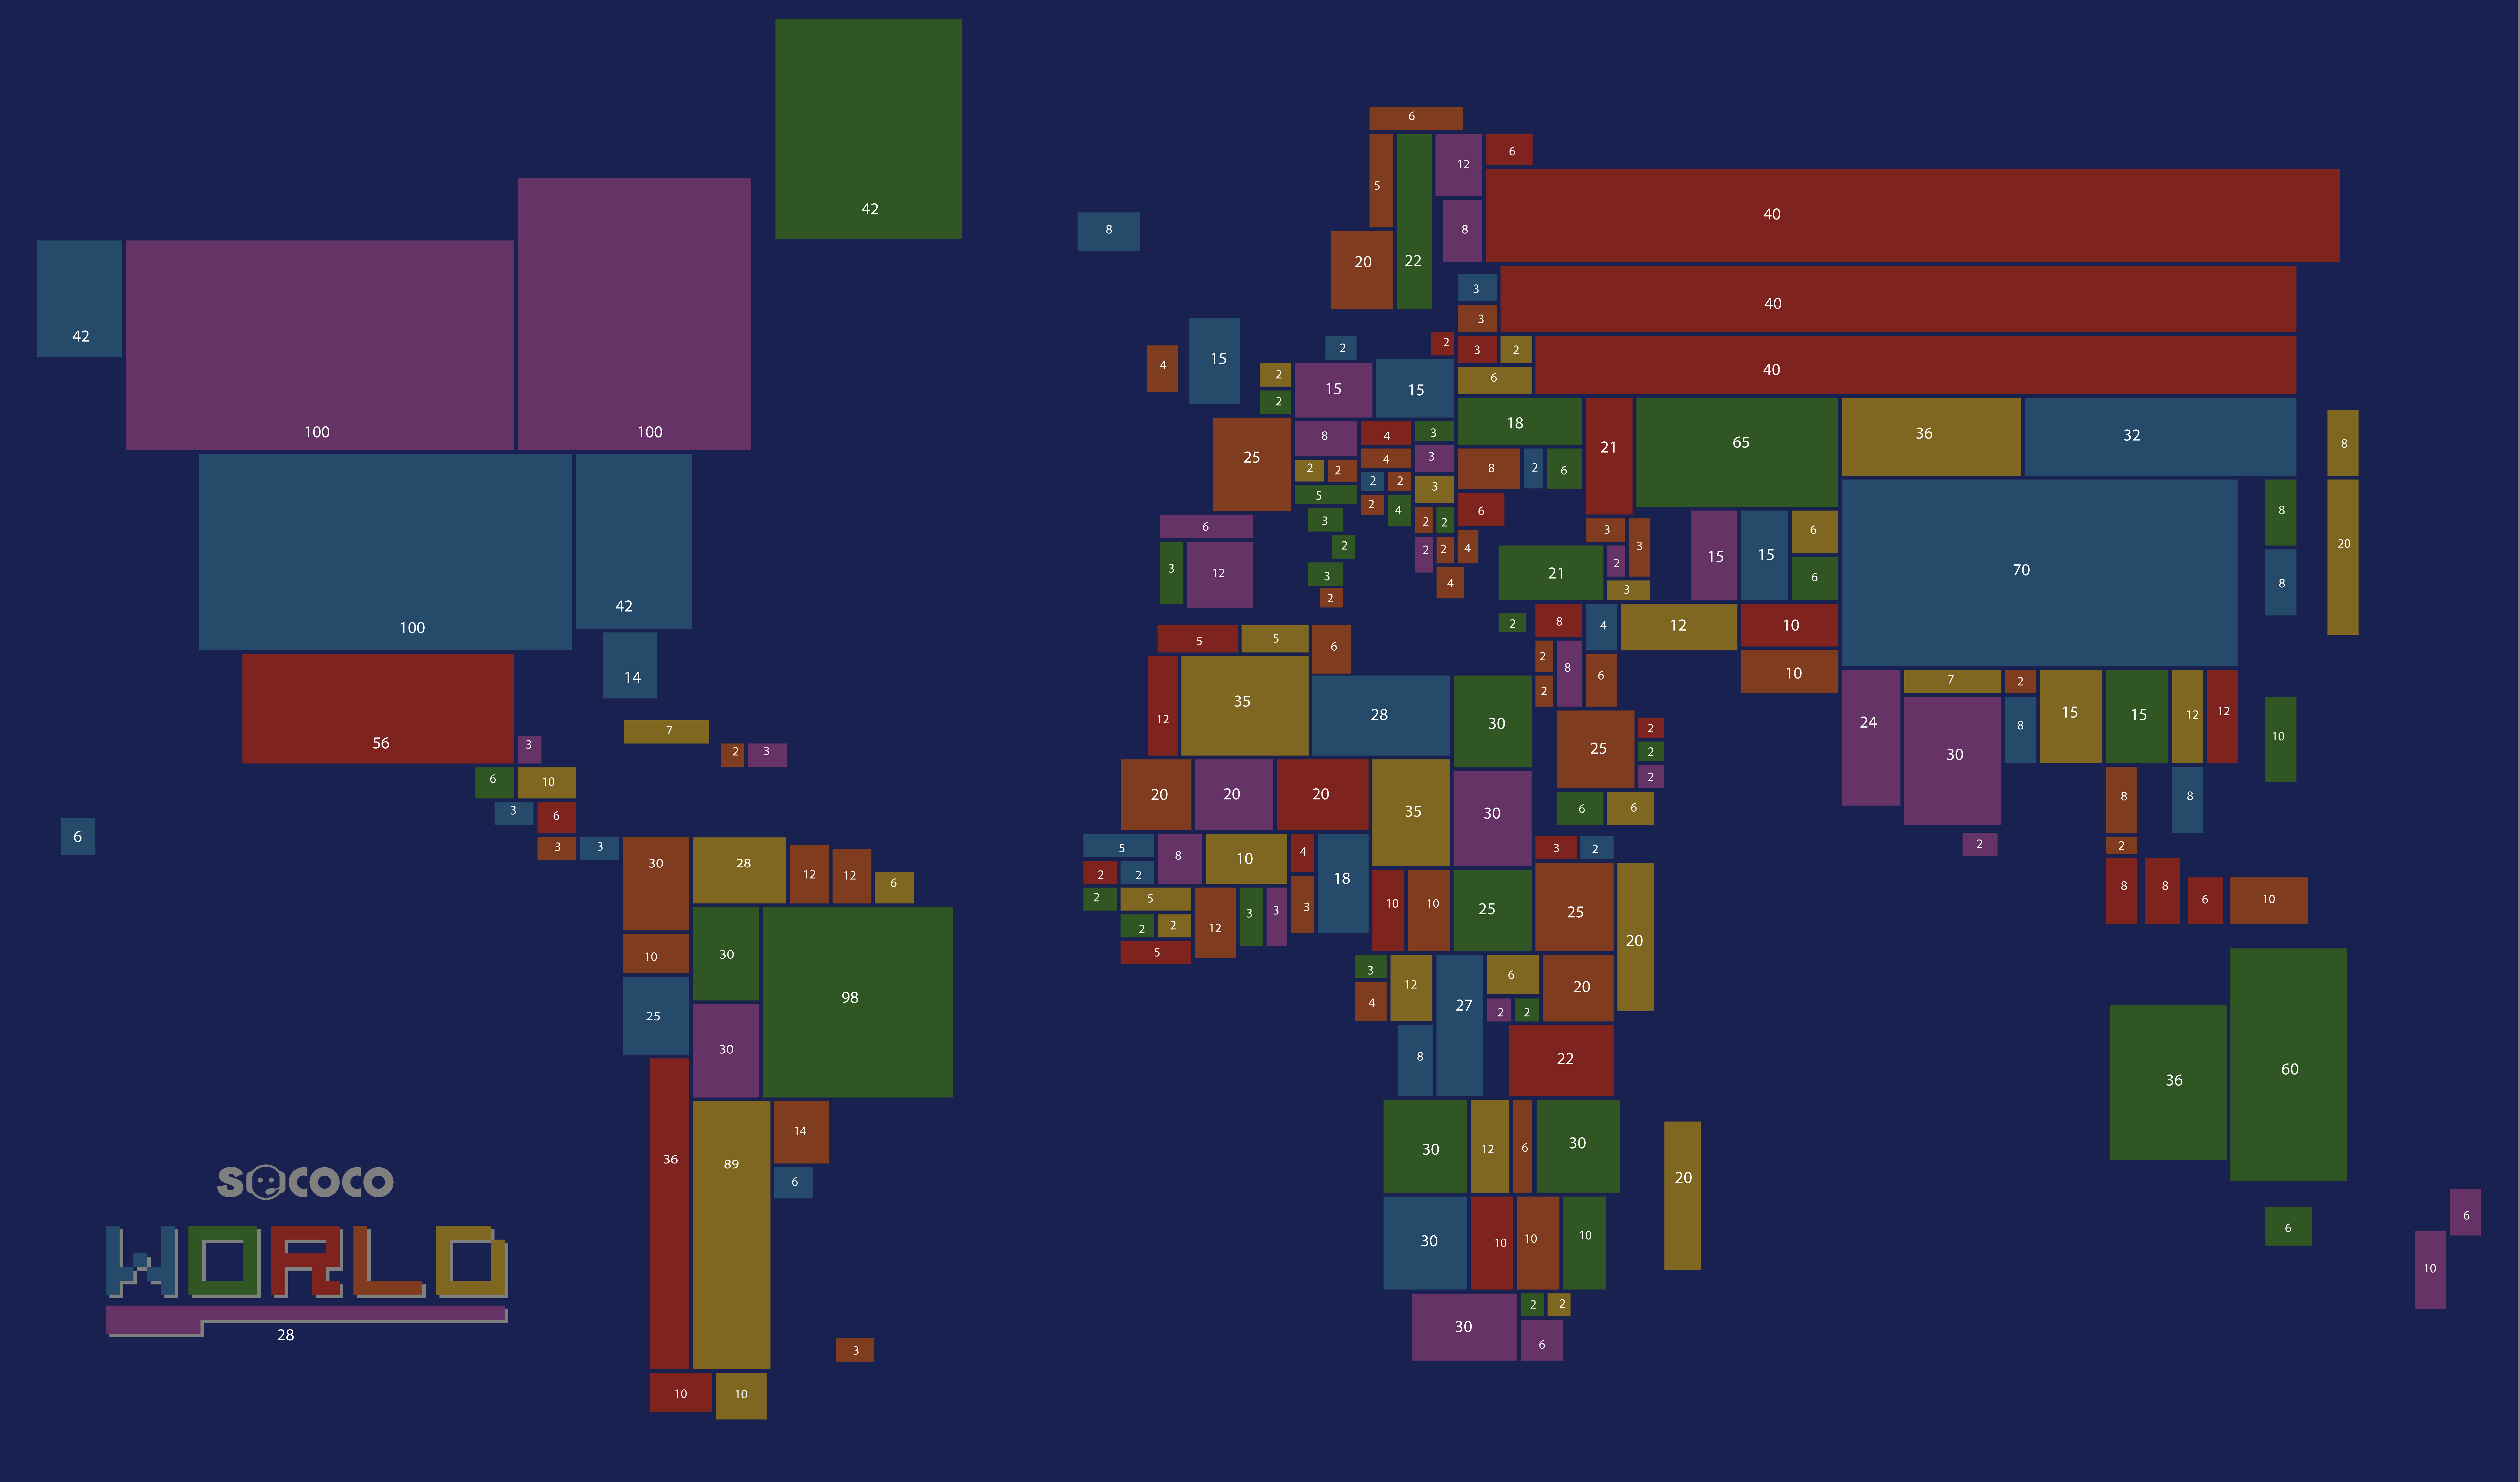 World_Map_roomcapacities.jpg